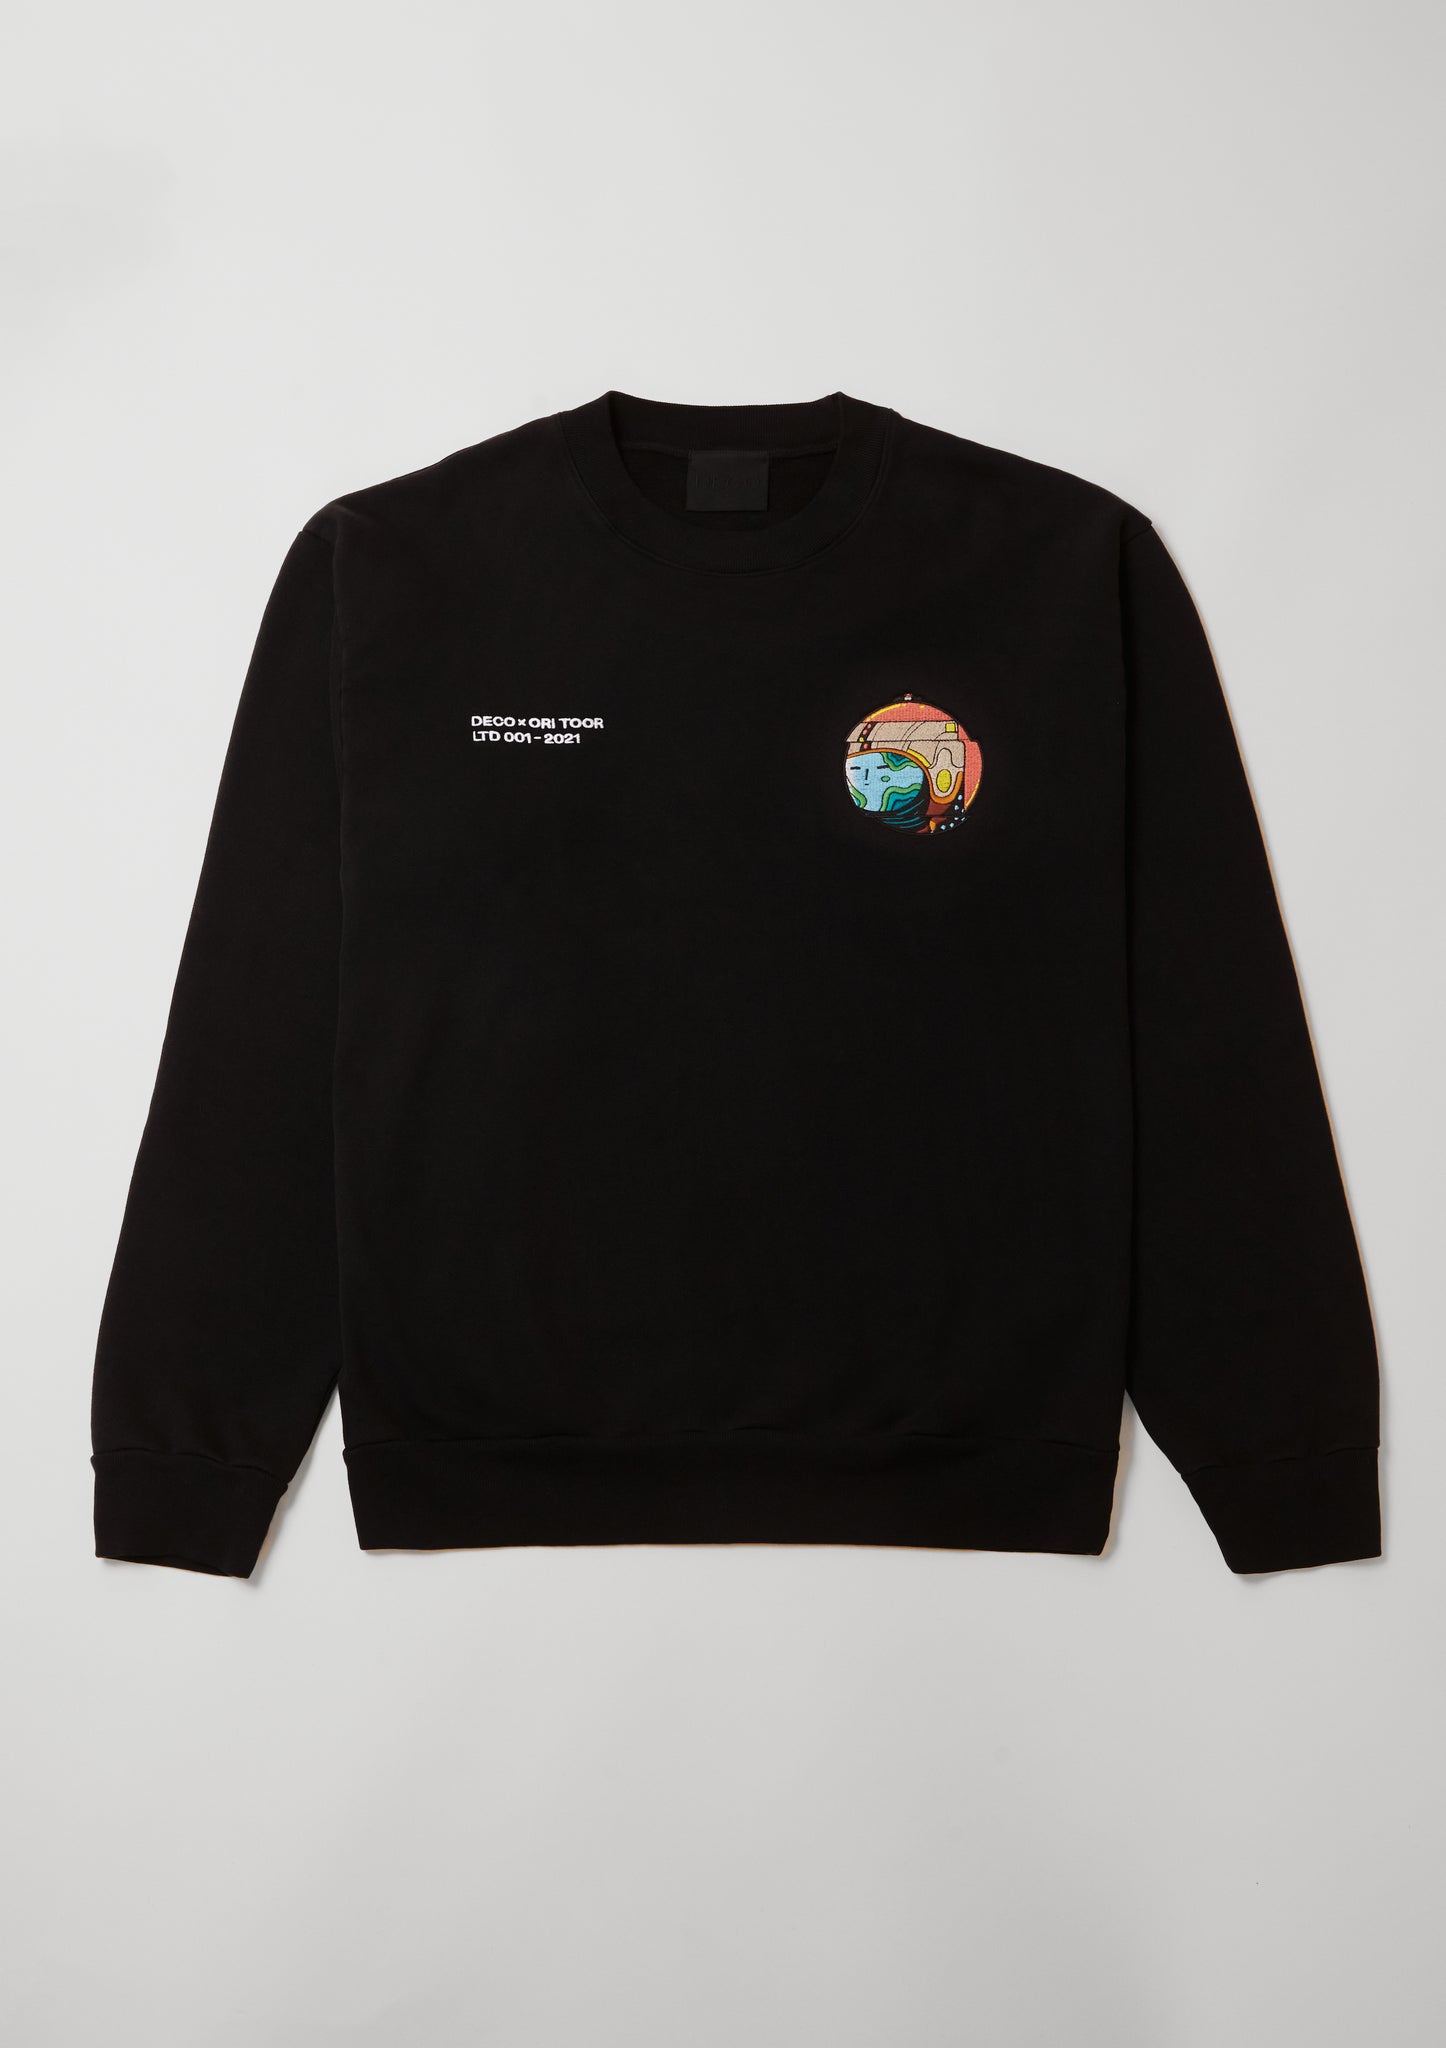 Ori Toor - Limited Edition Sweatshirt - Black